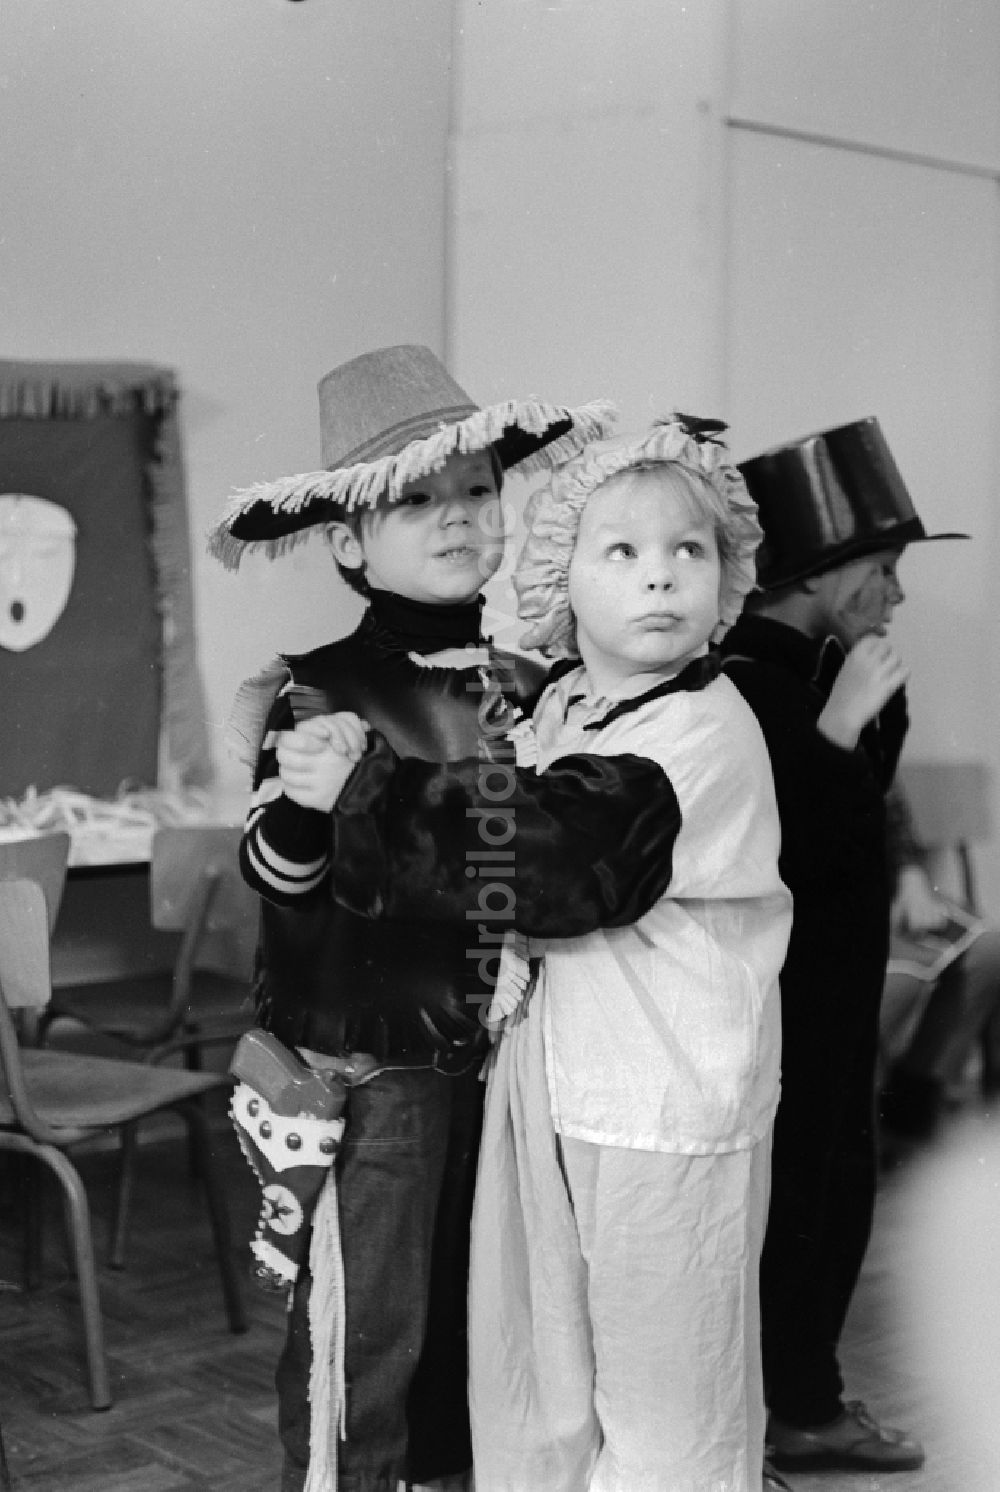 DDR-Bildarchiv: Berlin - Fasching im Kindergarten in Berlin